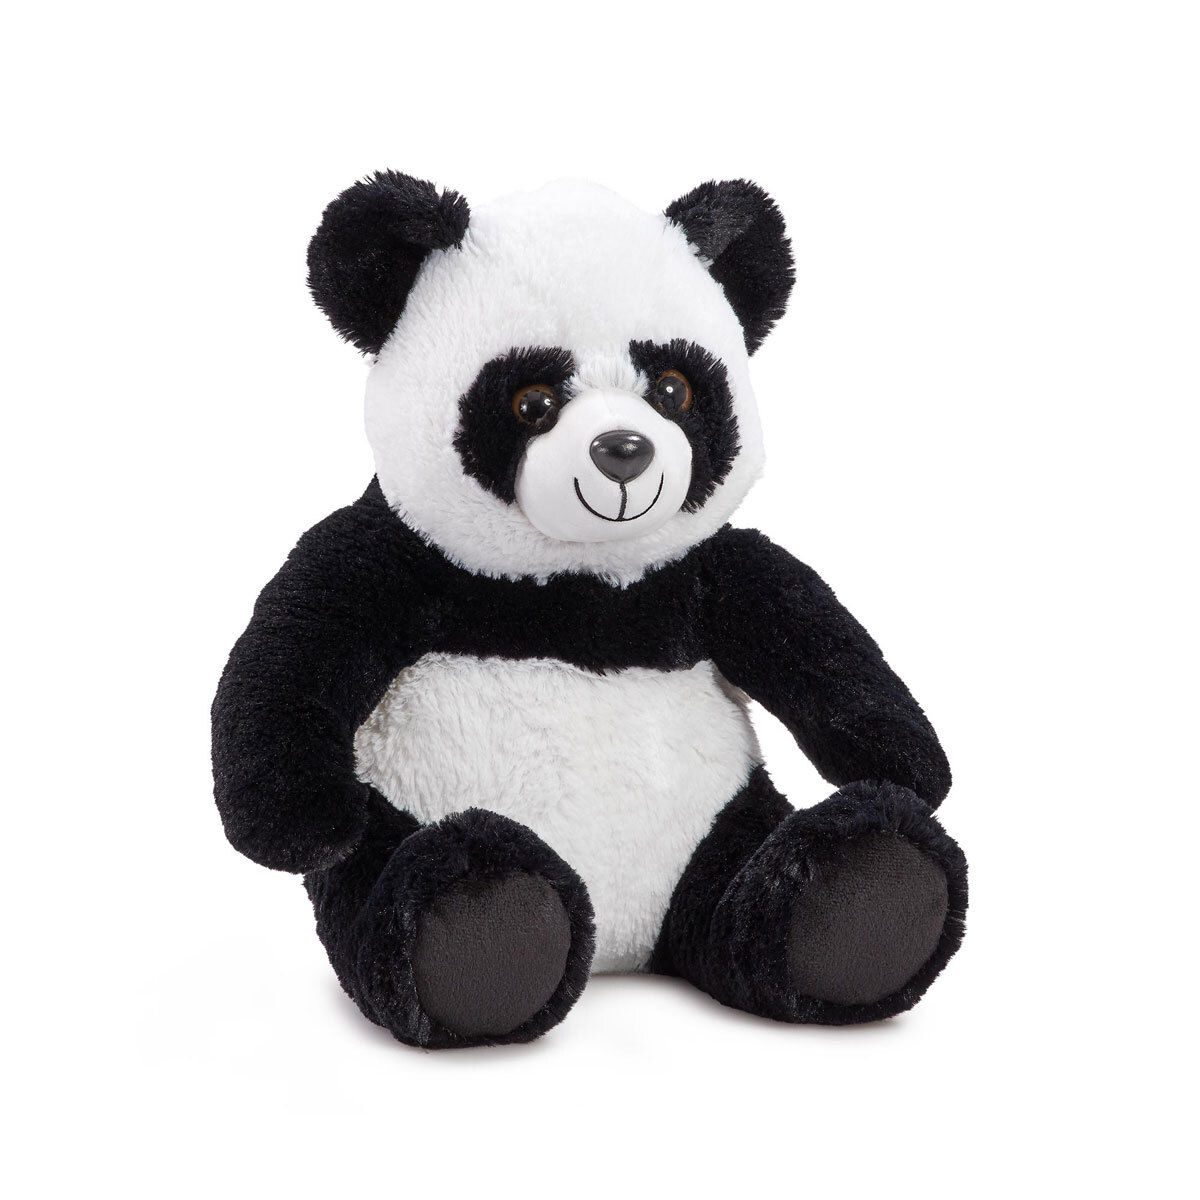 Snuggle Buddies 30cm Endangered Animals Plush Toy - Panda | The Entertainer